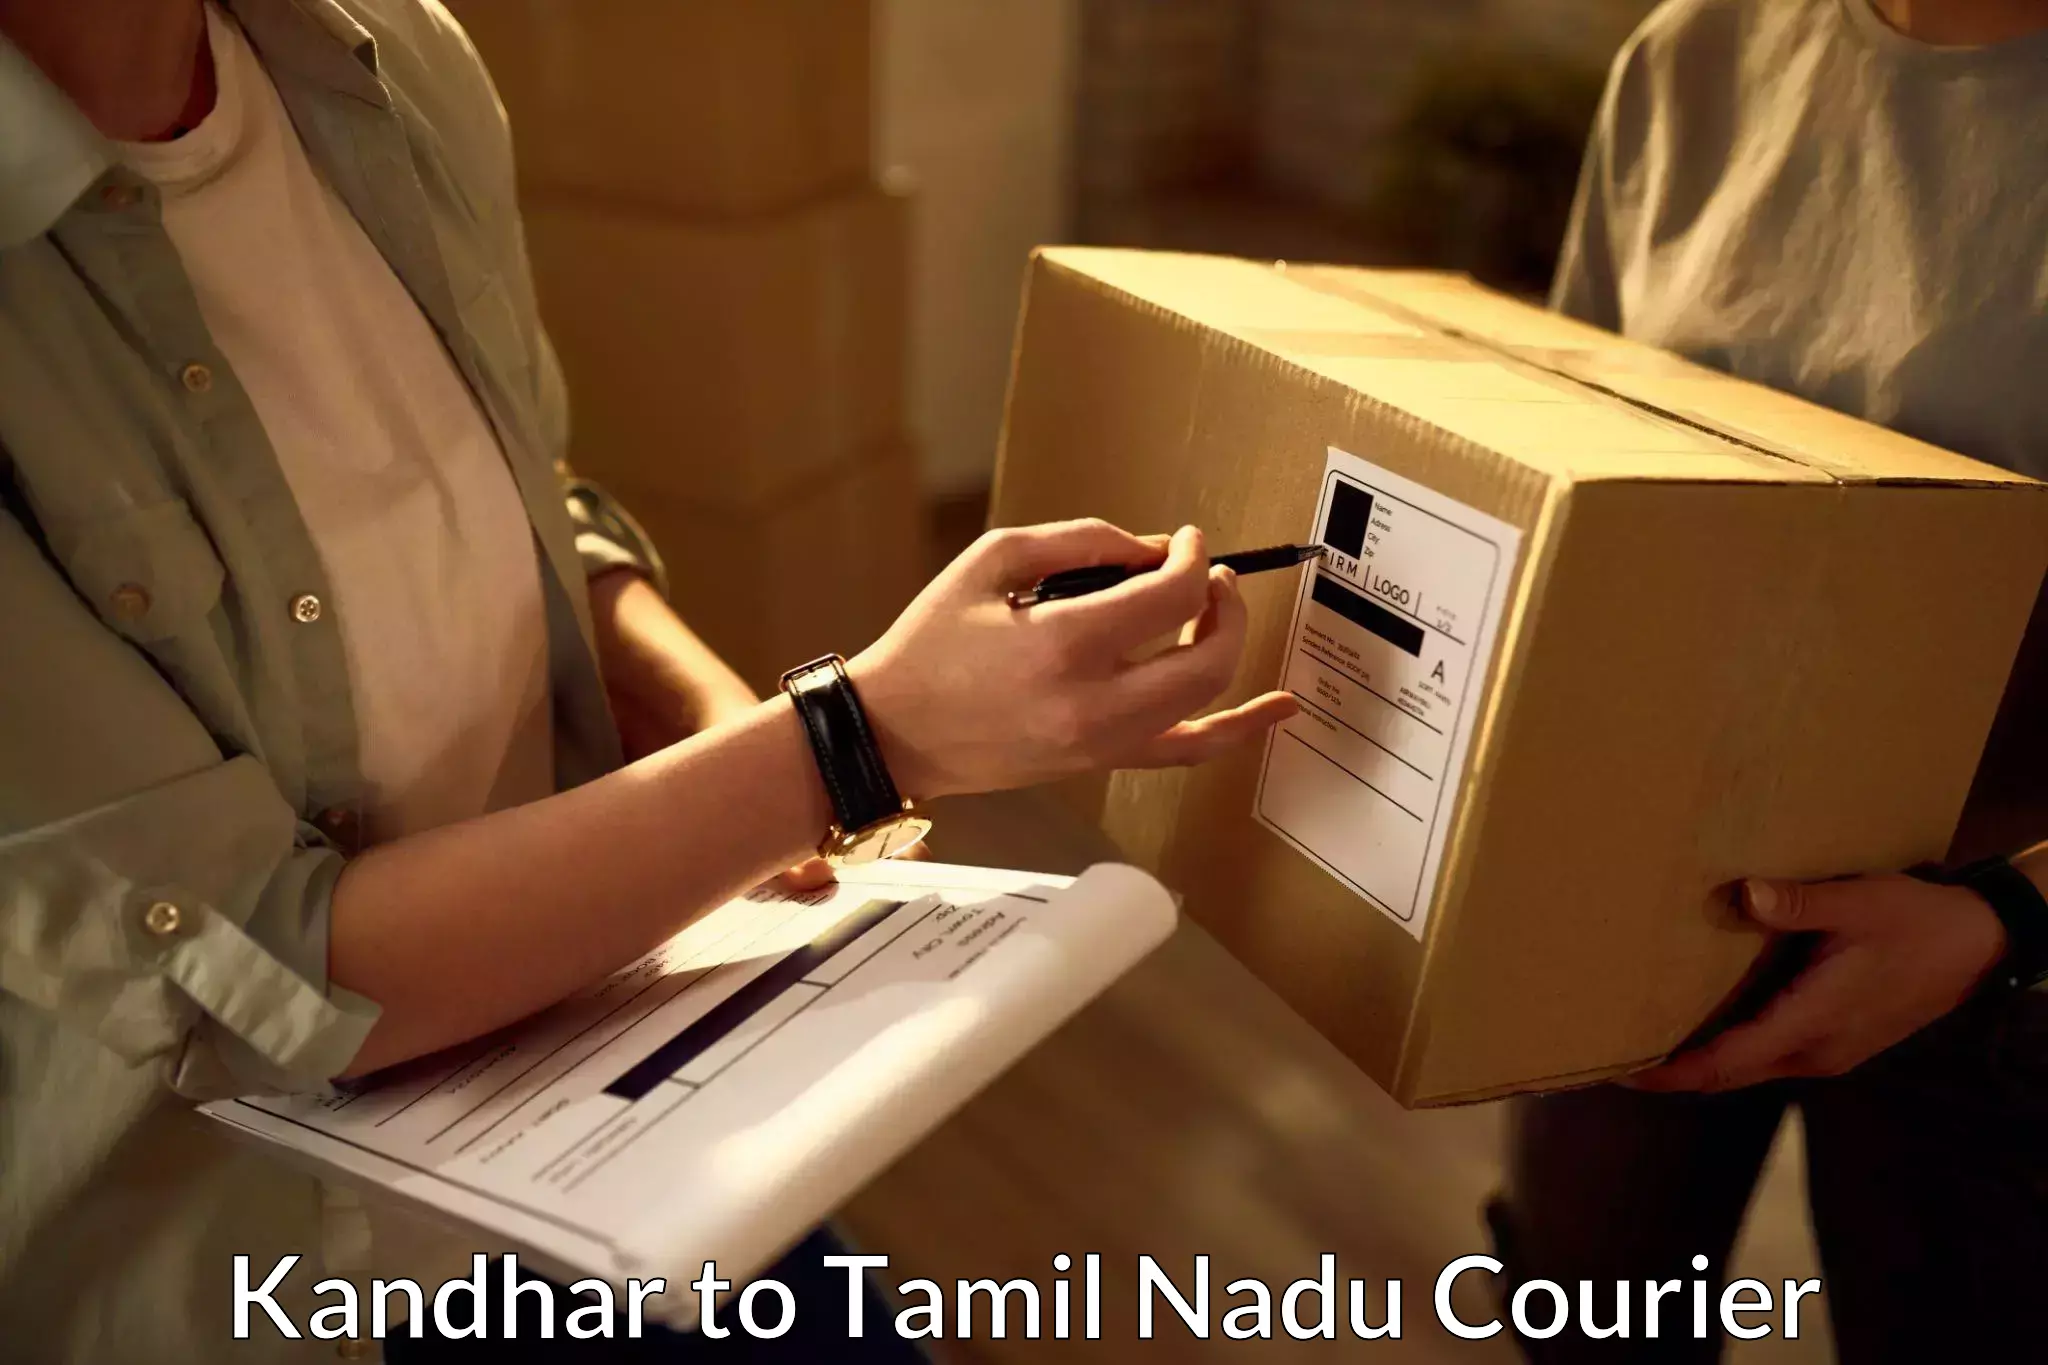 Personalized courier experiences Kandhar to Nagapattinam